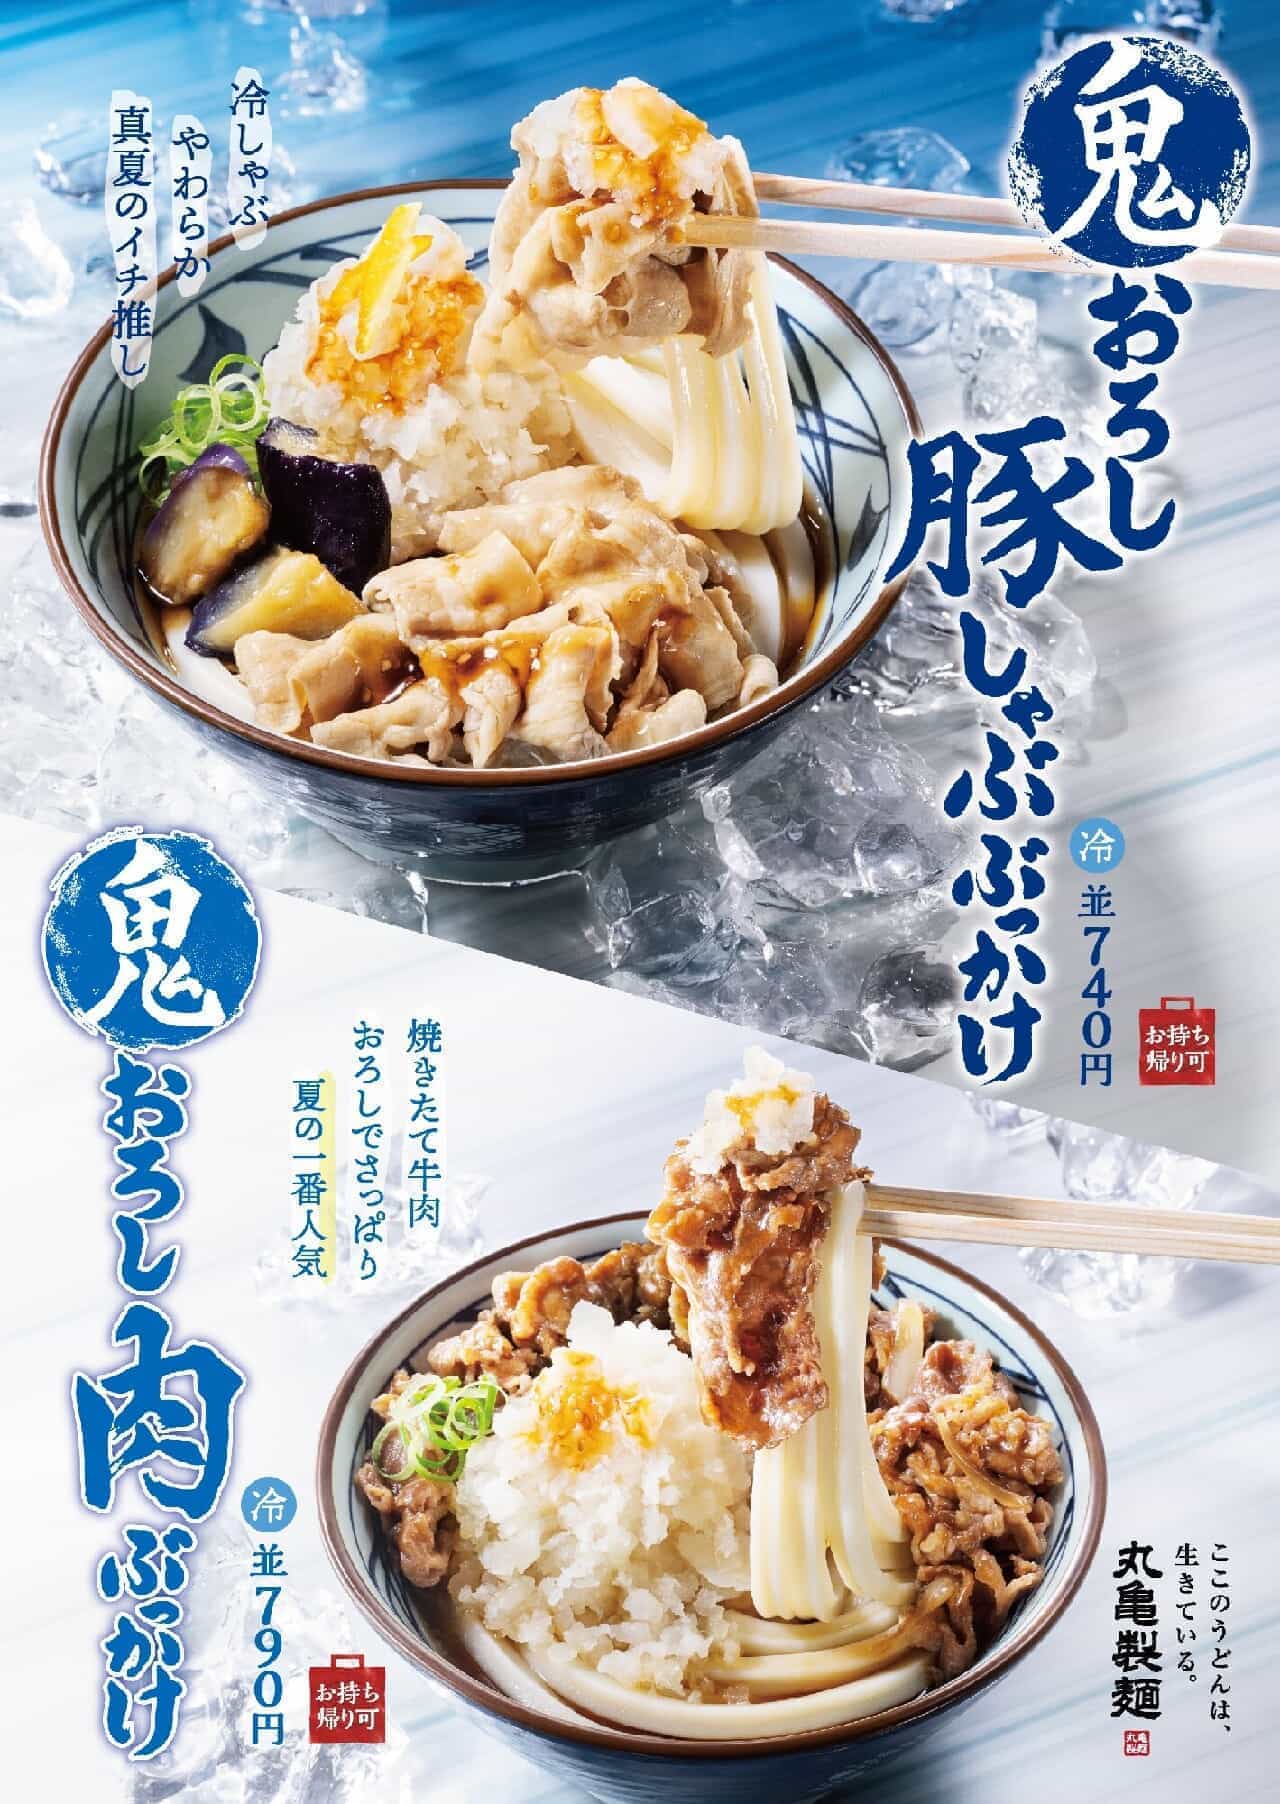 Marugame Seimen "Oni Oroshi Pork Shabu Shabu Udon Noodle